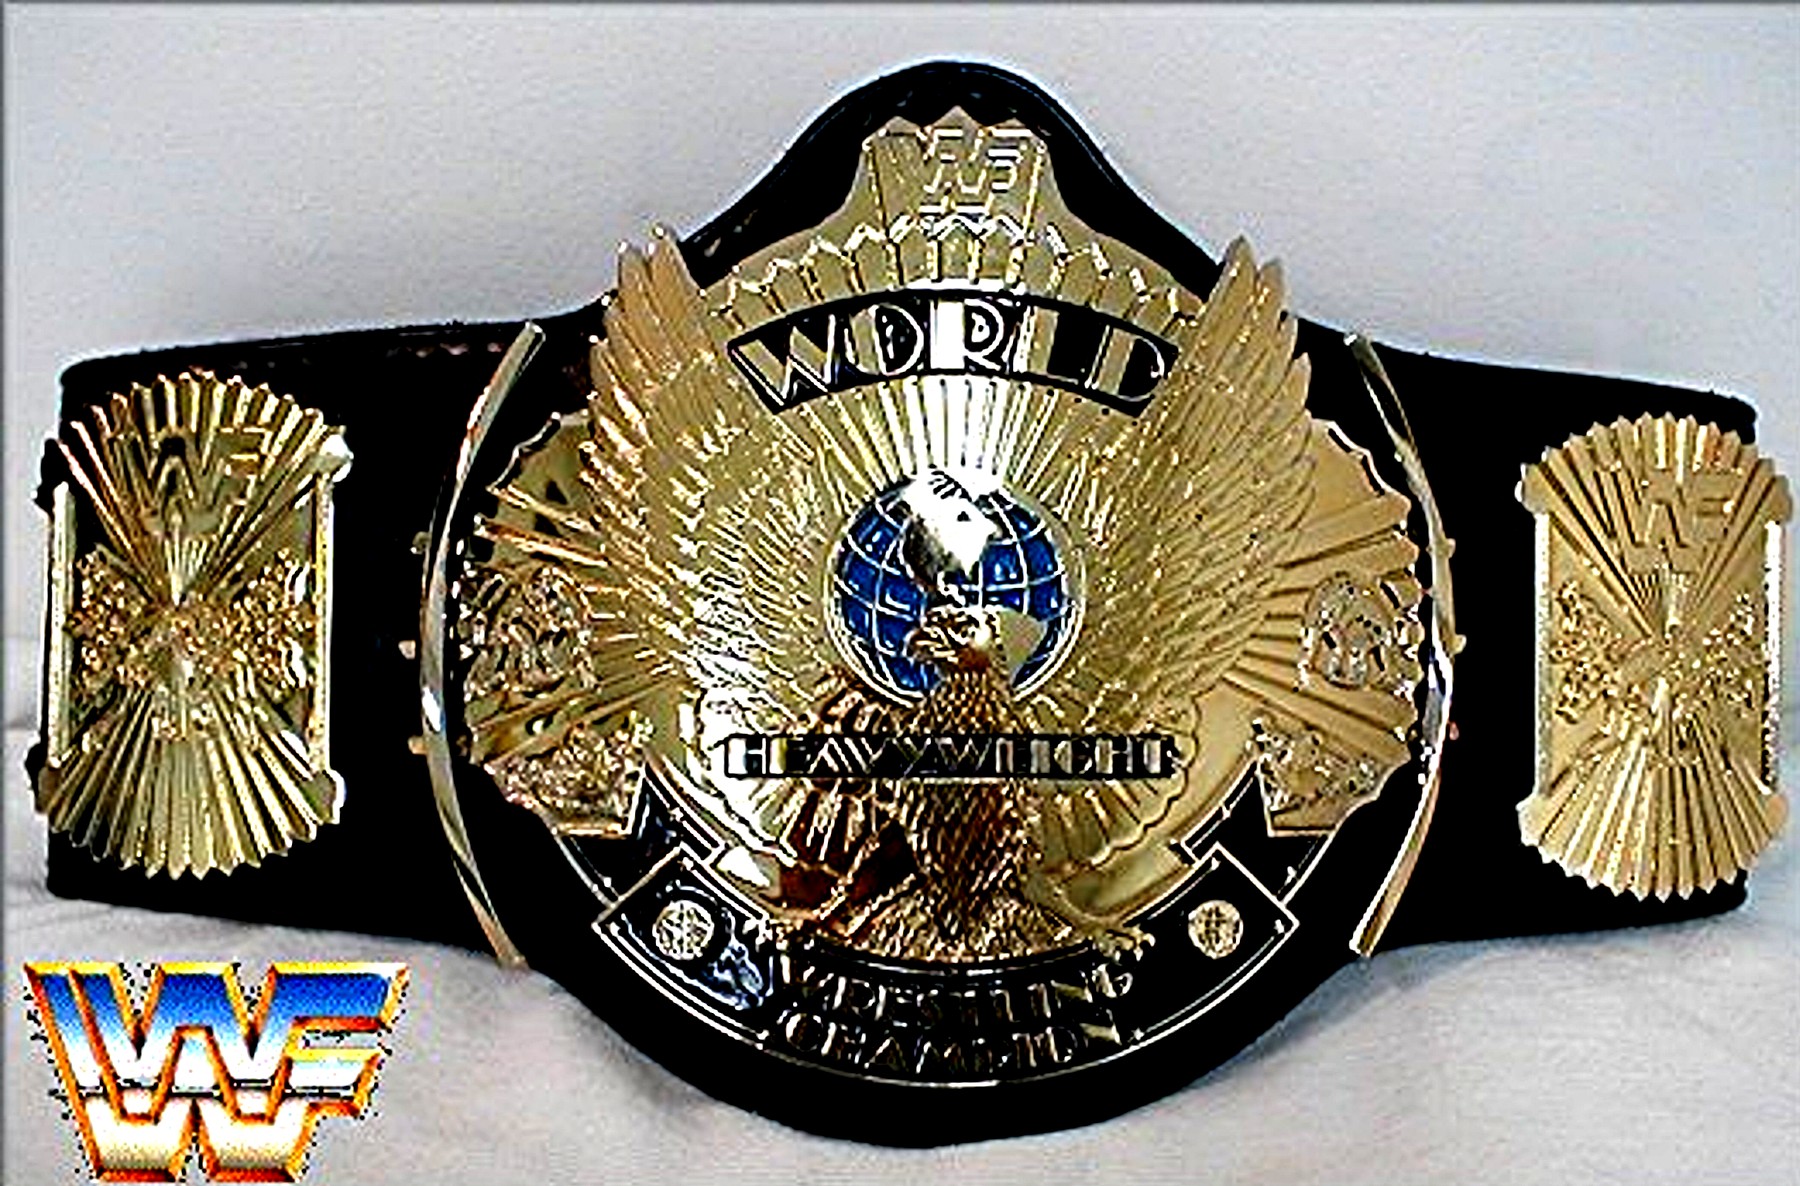 Wwf World Heavyweight Championship